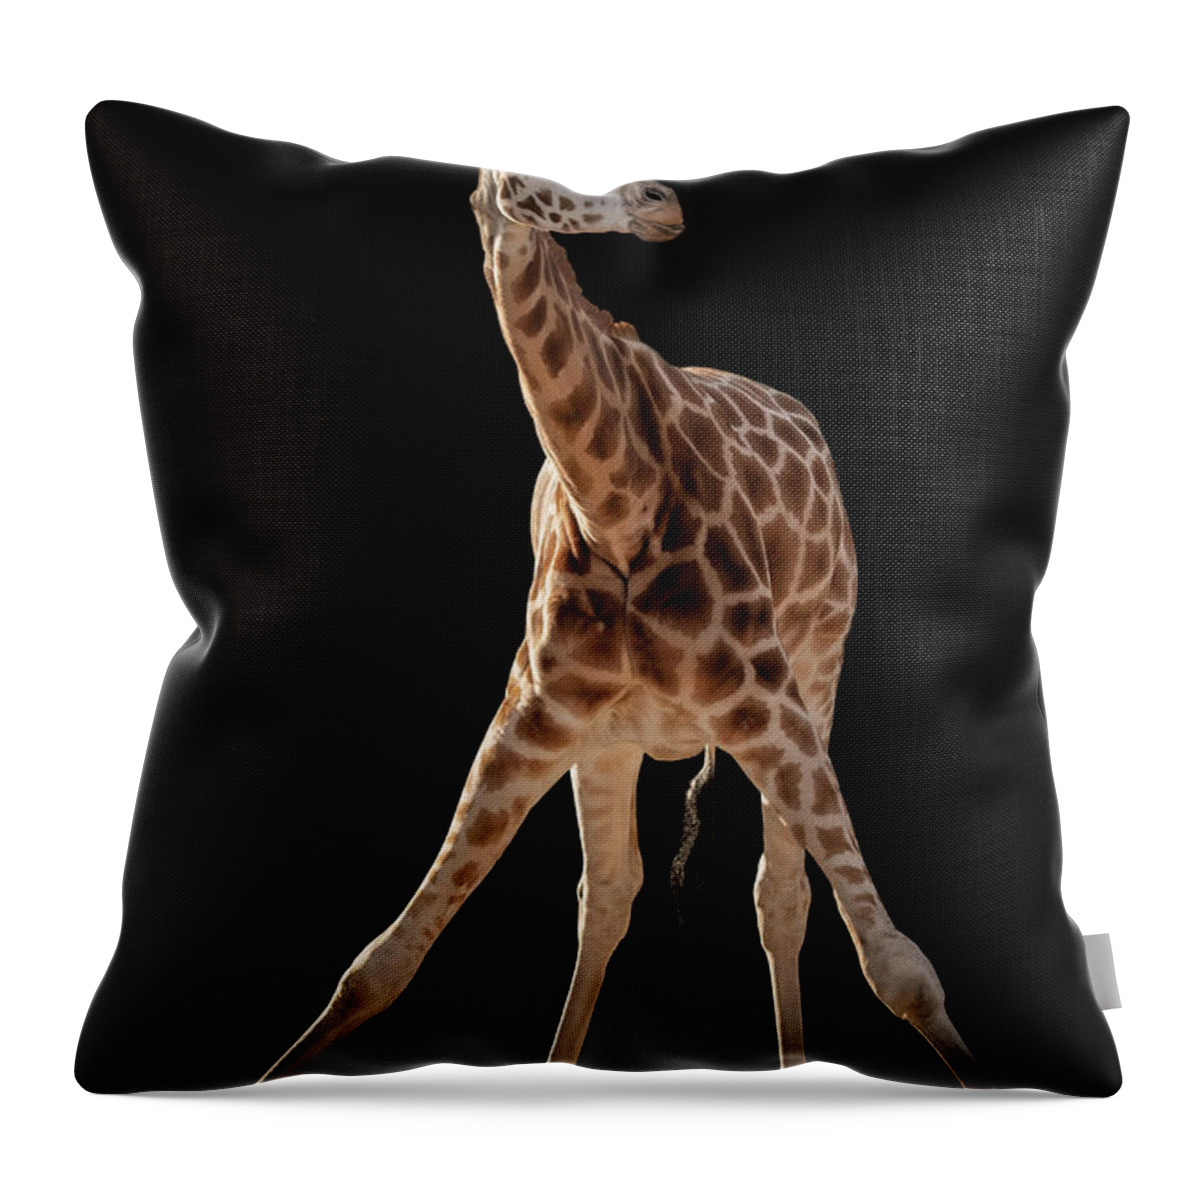 Funny Throw Pillow featuring the digital art Funny Giraffe by Marjolein Van Middelkoop